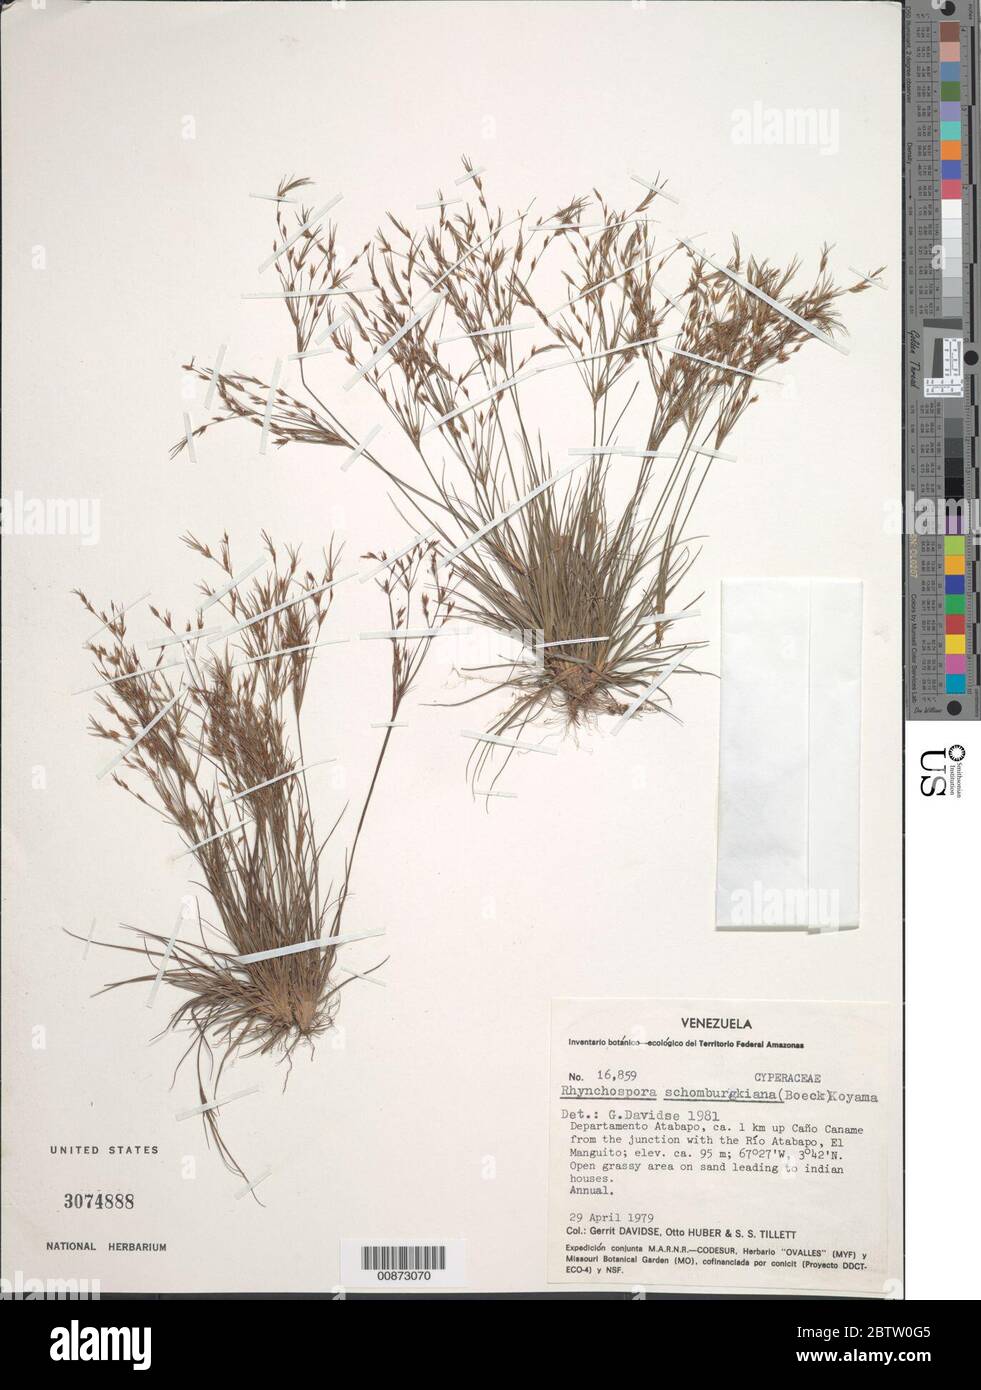 Rhynchospora schomburgkiana Boeckeler T Koyama. Stock Photo